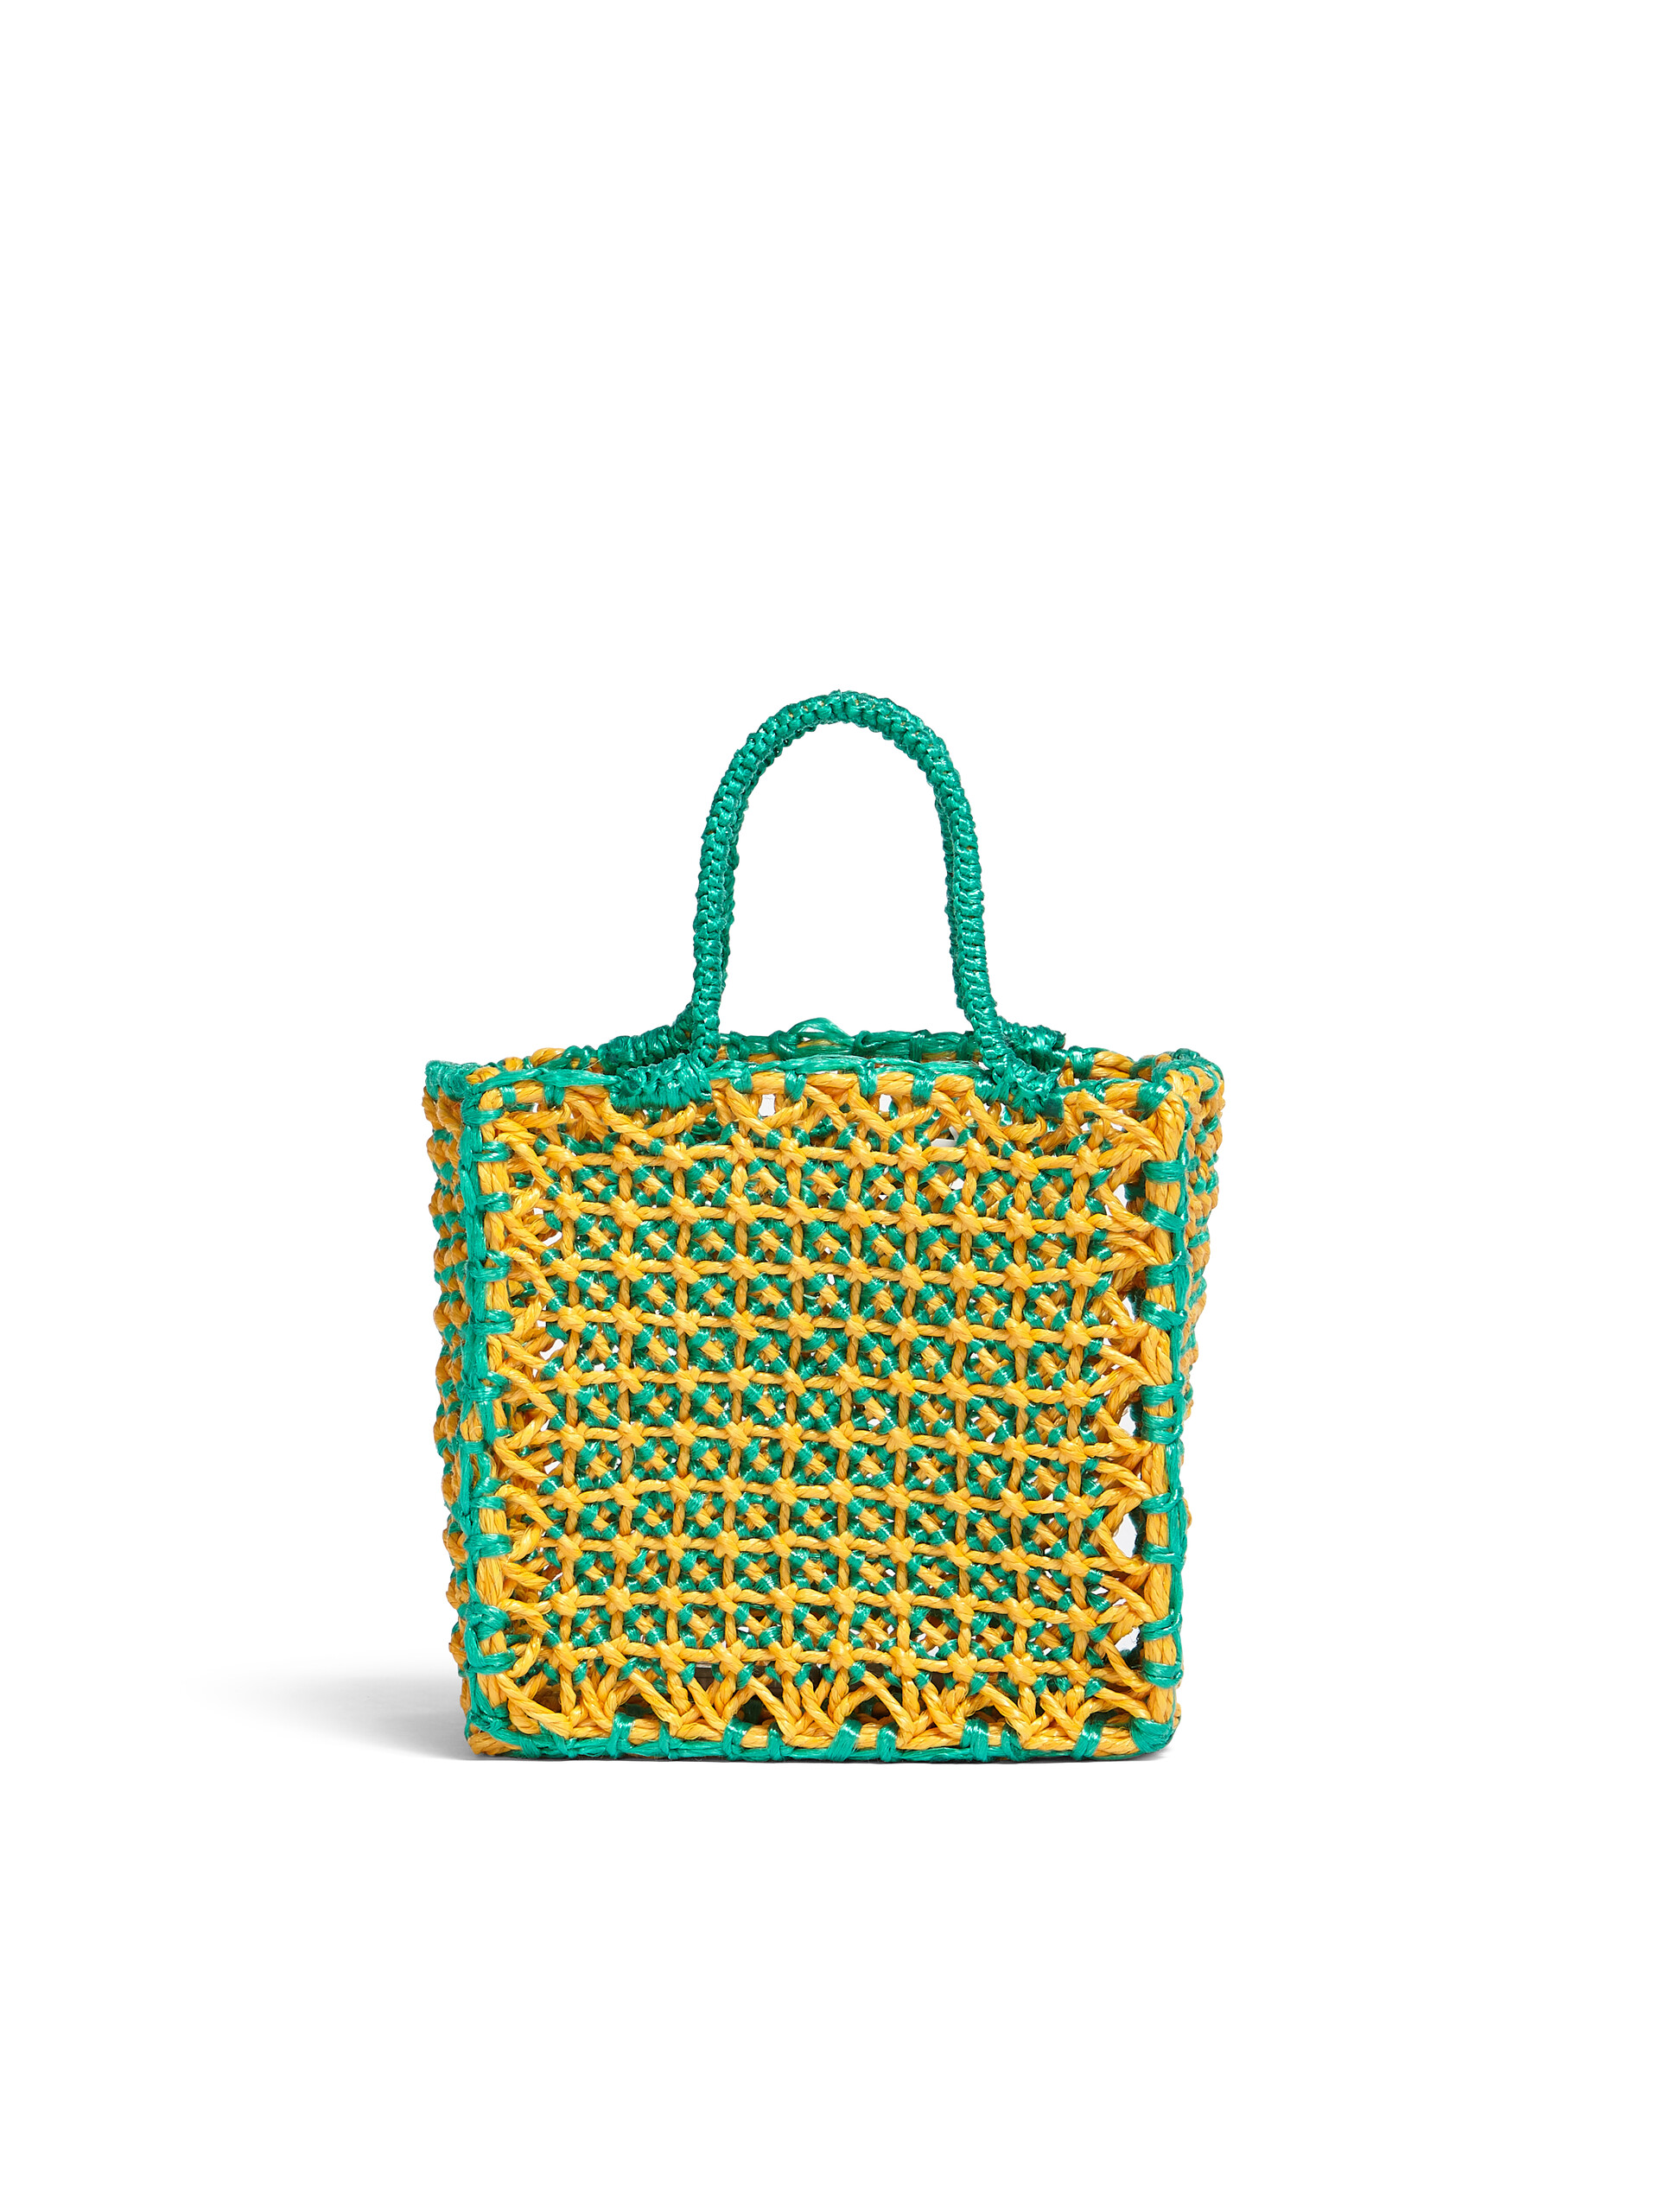 MARNI MARKET JURTA small bag in green and yellow crochet - Bags - Image 3